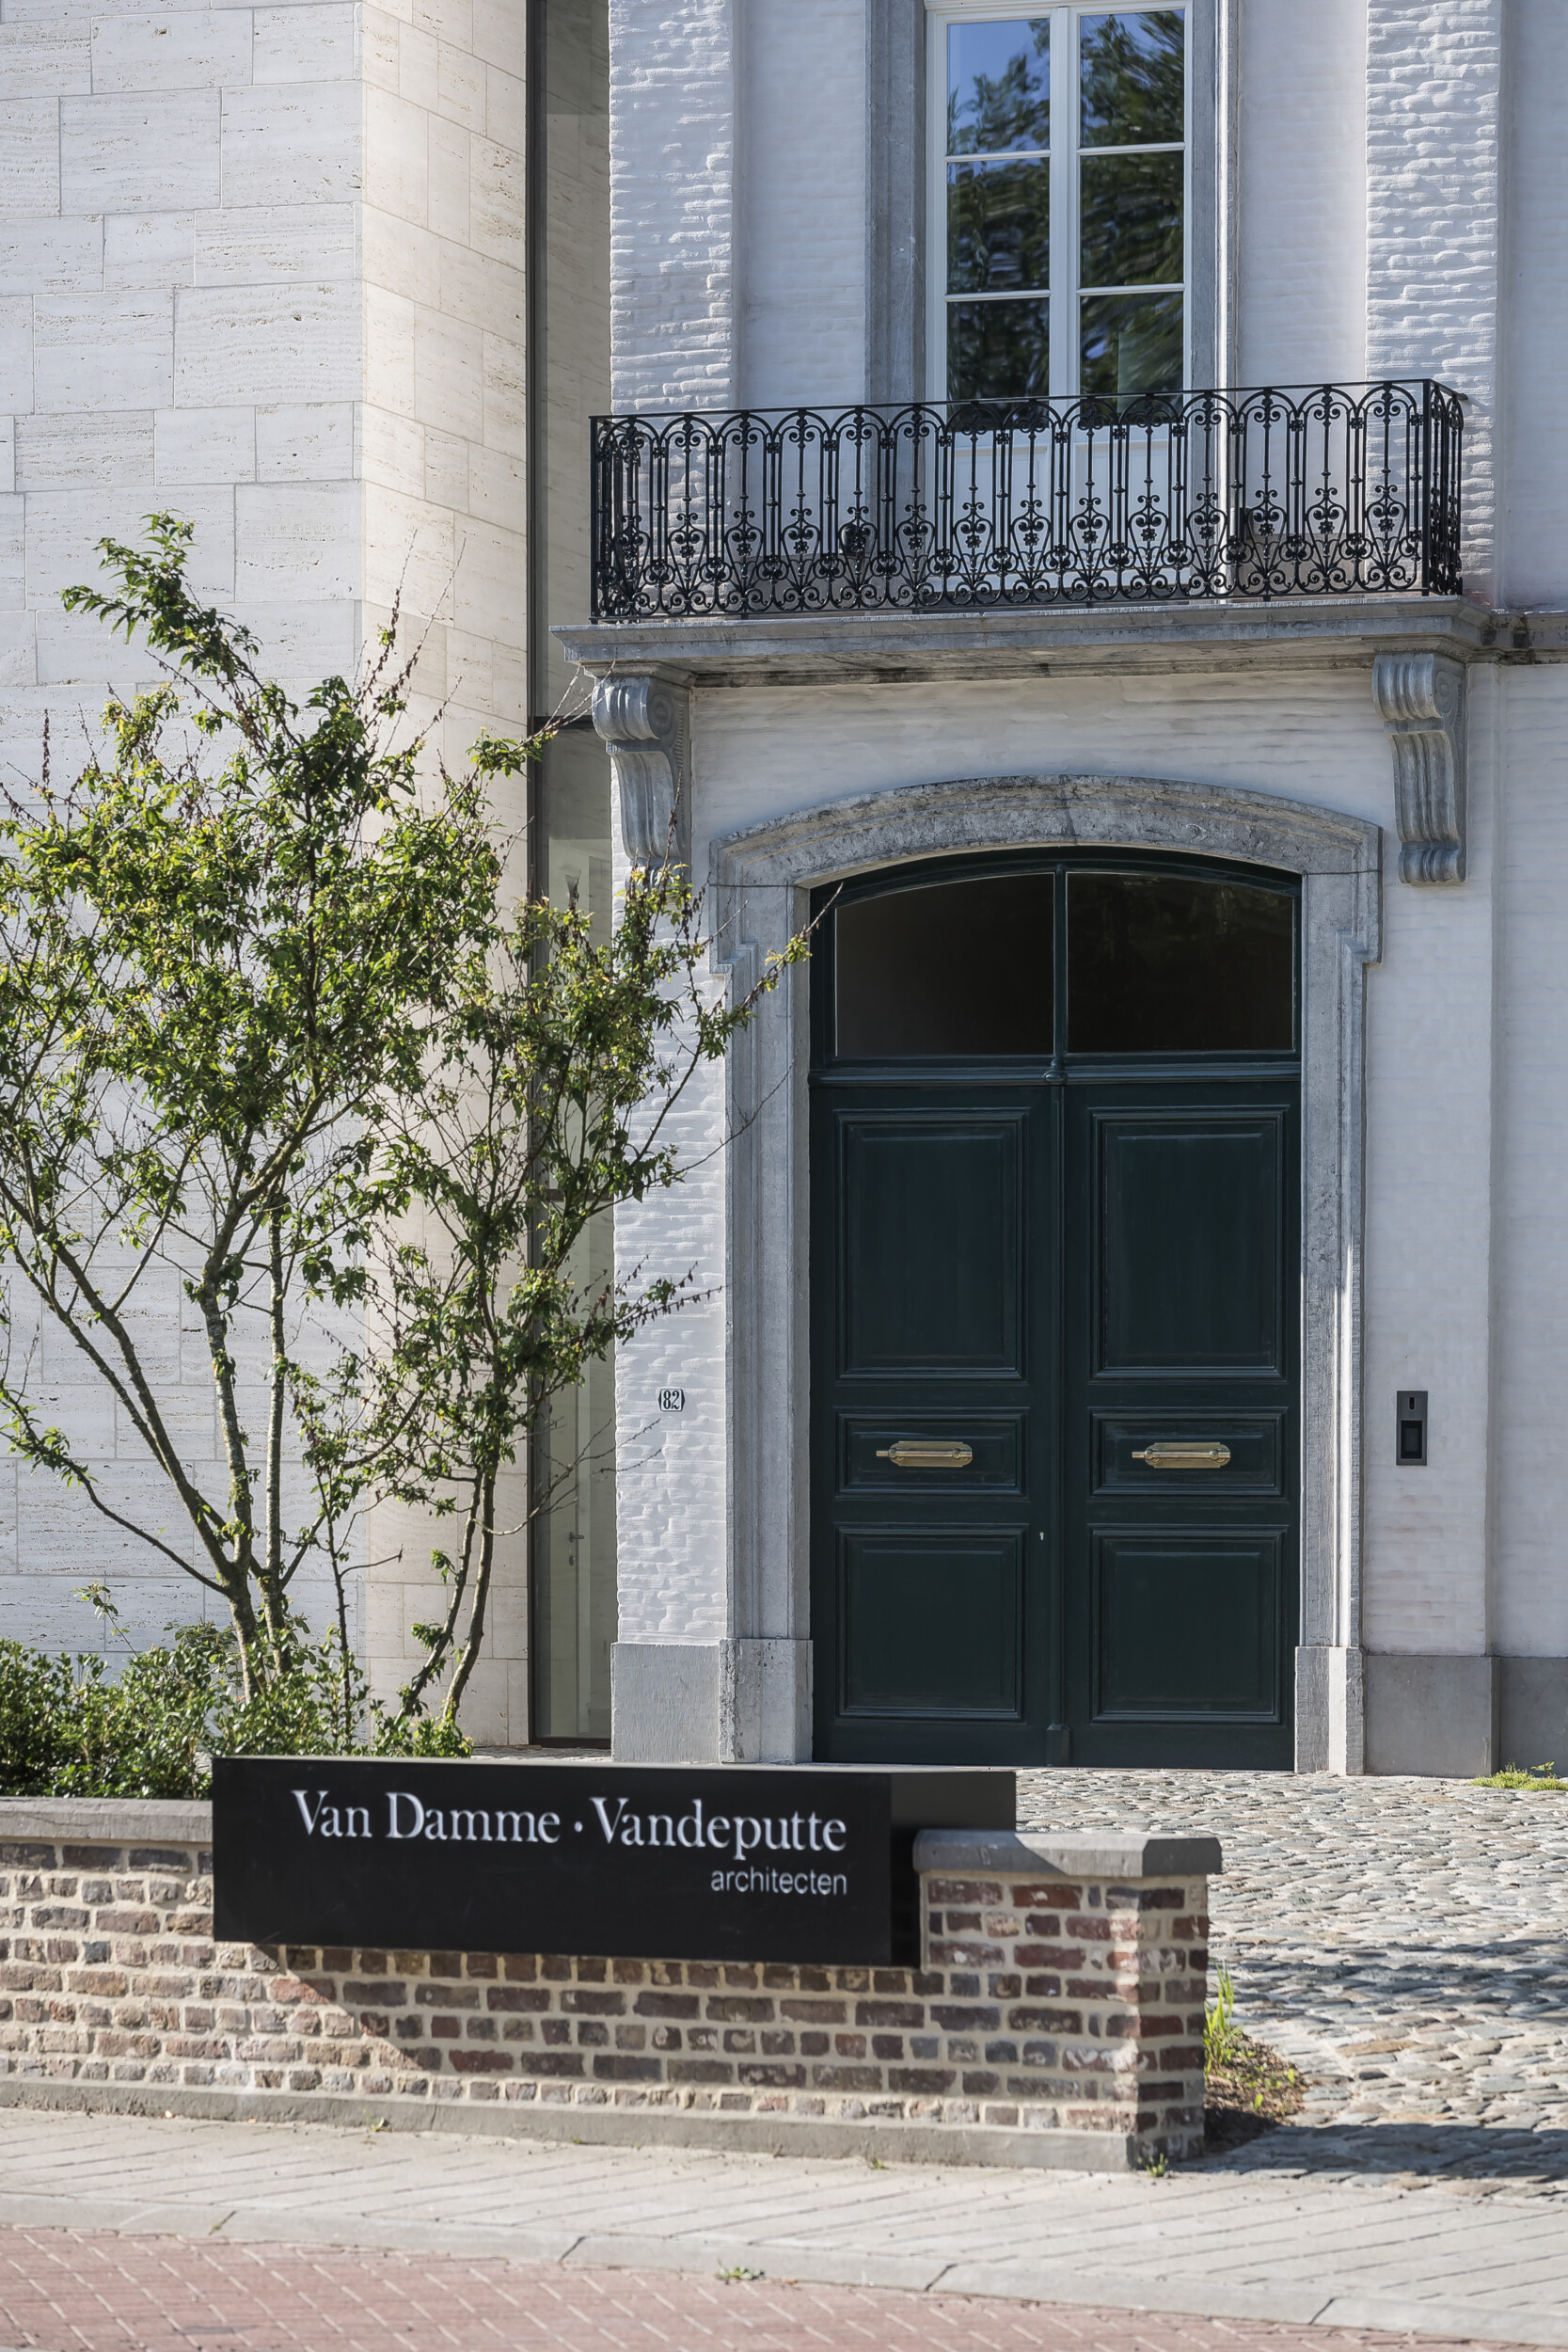 Residence Haessebroucq - Office VDVA | Van Damme-Vandeputte